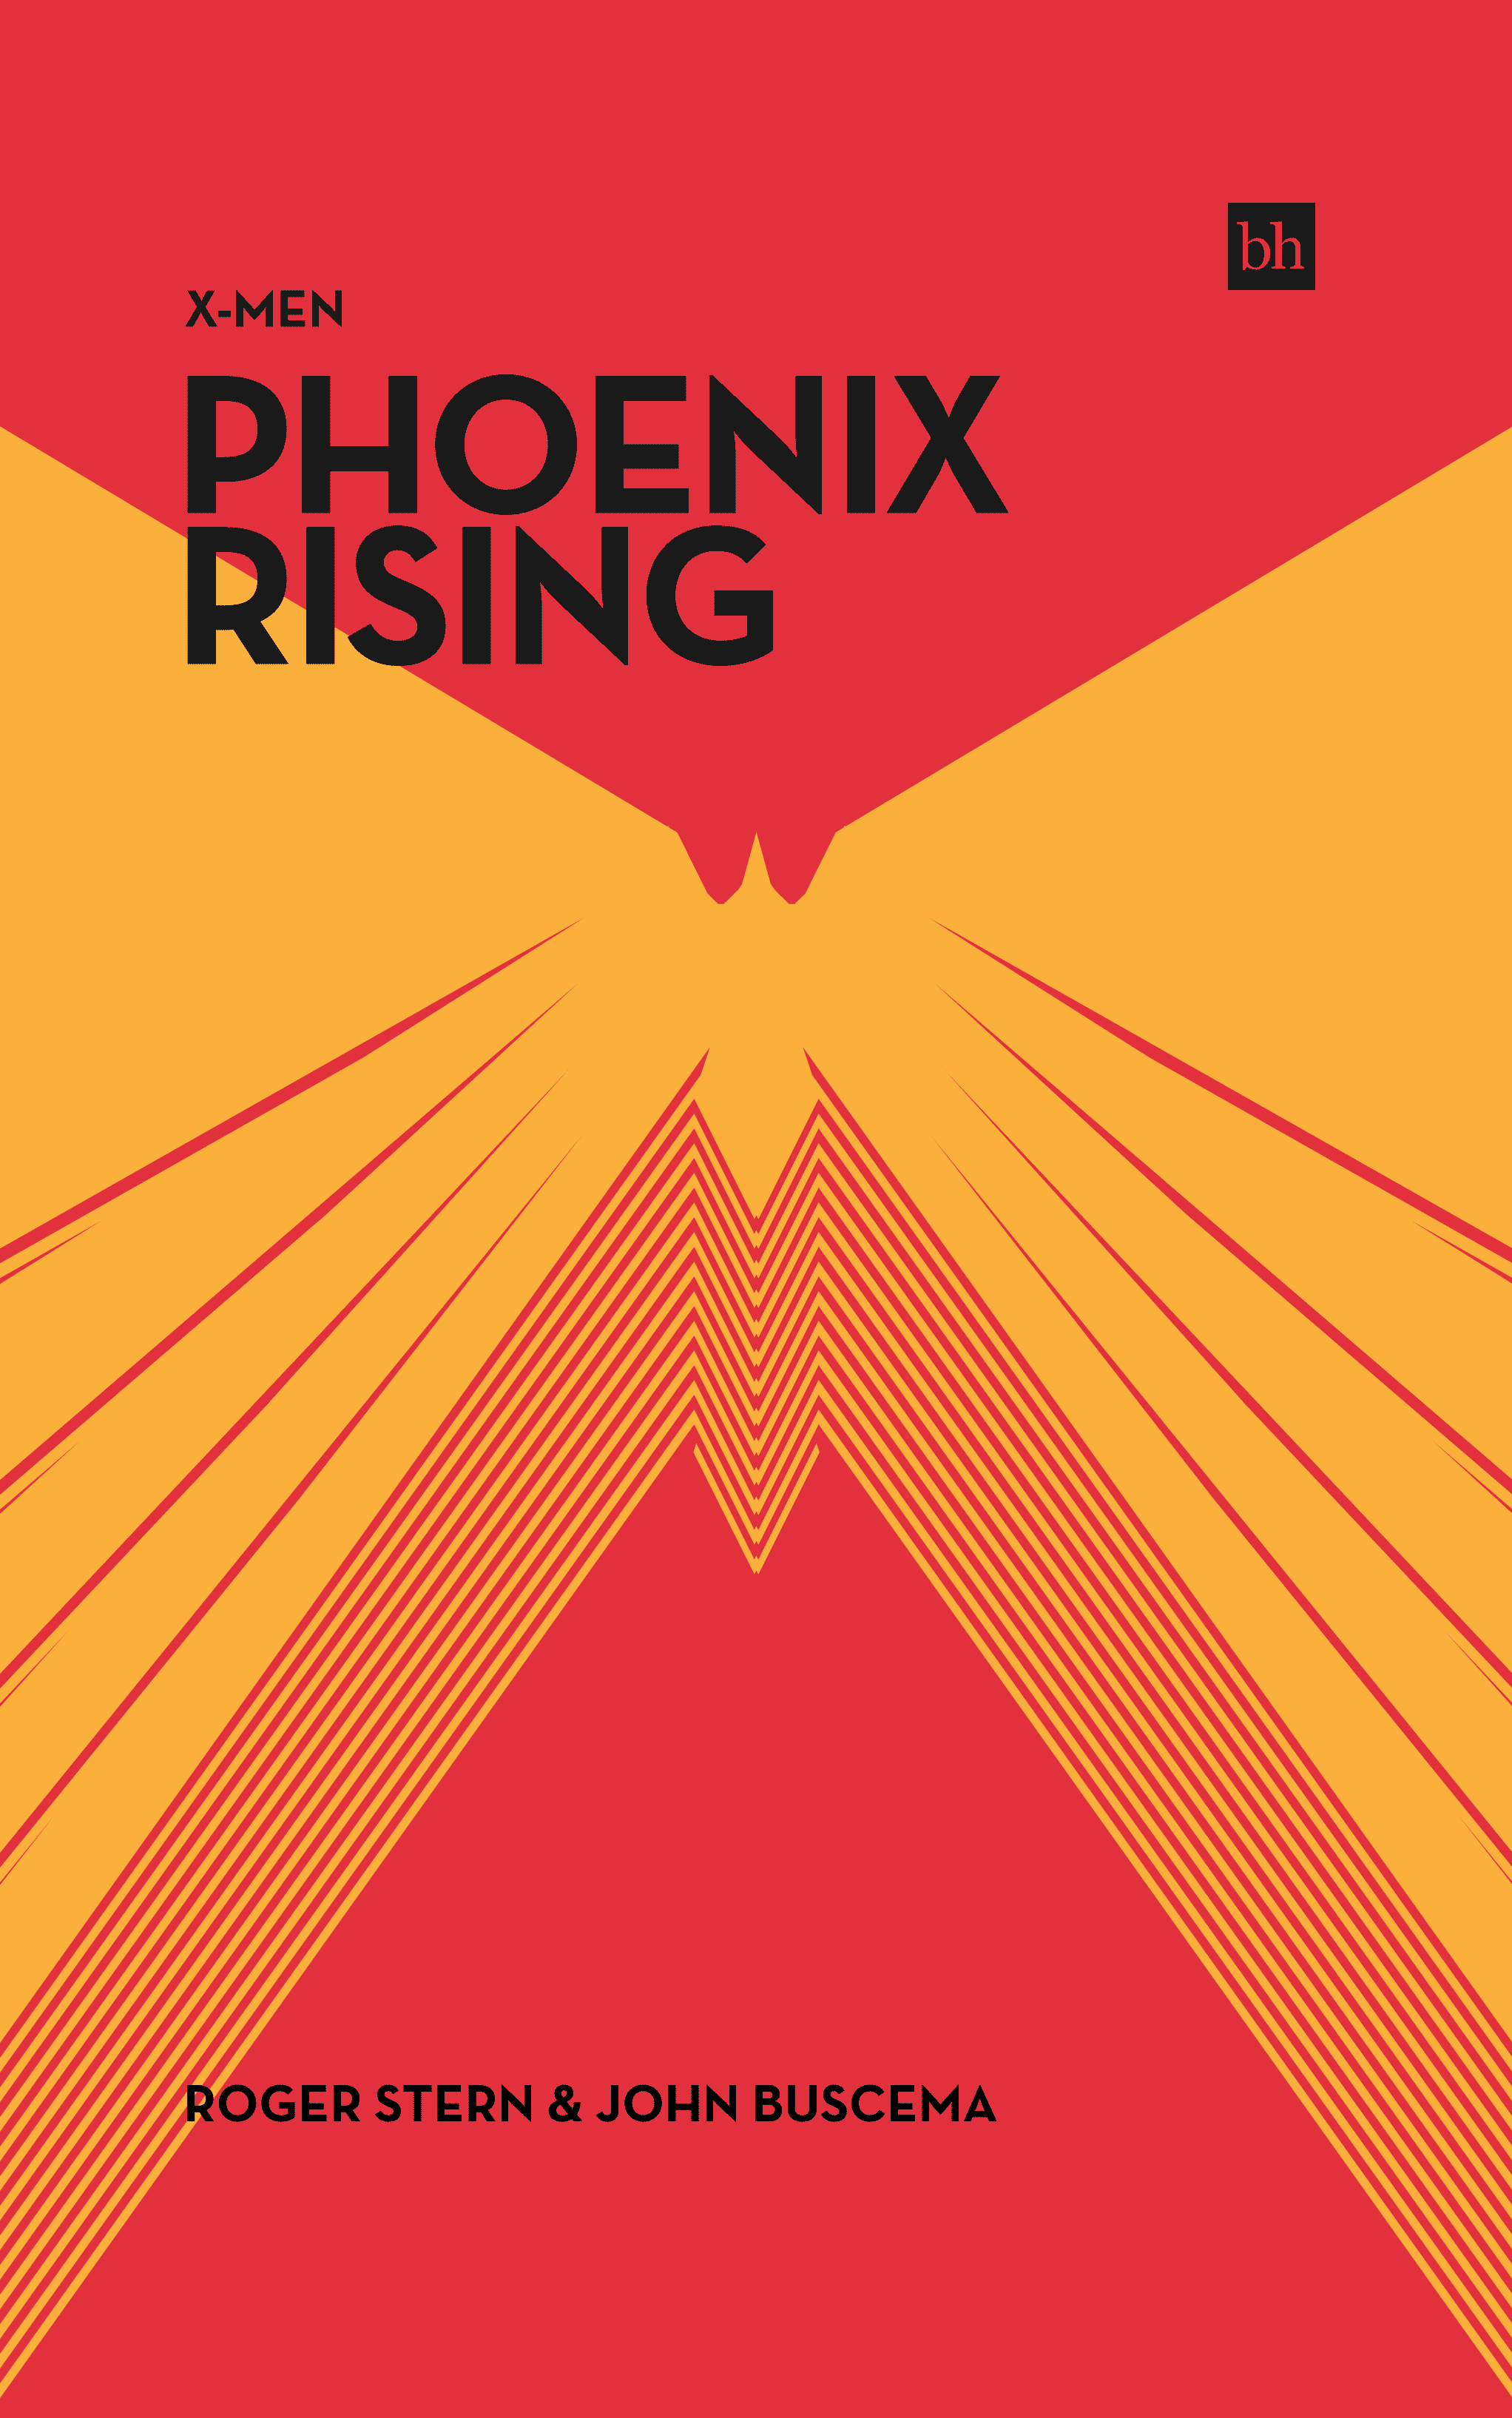 X-Men: Phoenix Rising by Roger Stern